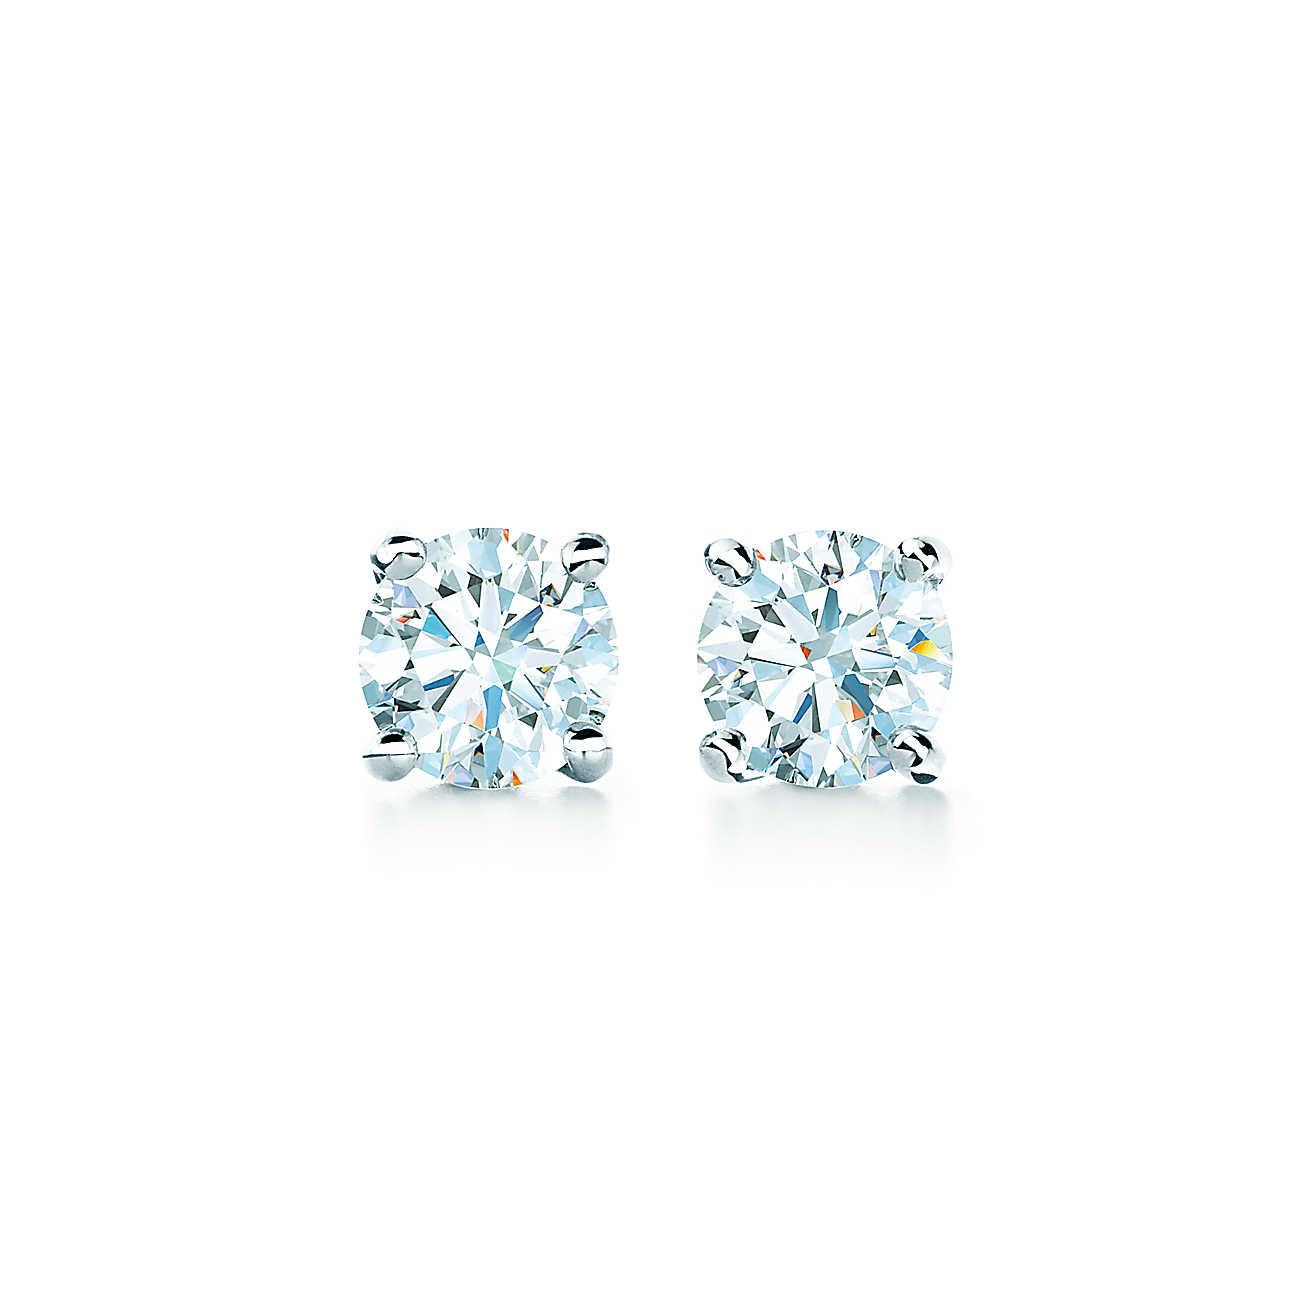 Tiffany Diamond Stud Earrings
 Tiffany solitaire diamond earrings in platinum